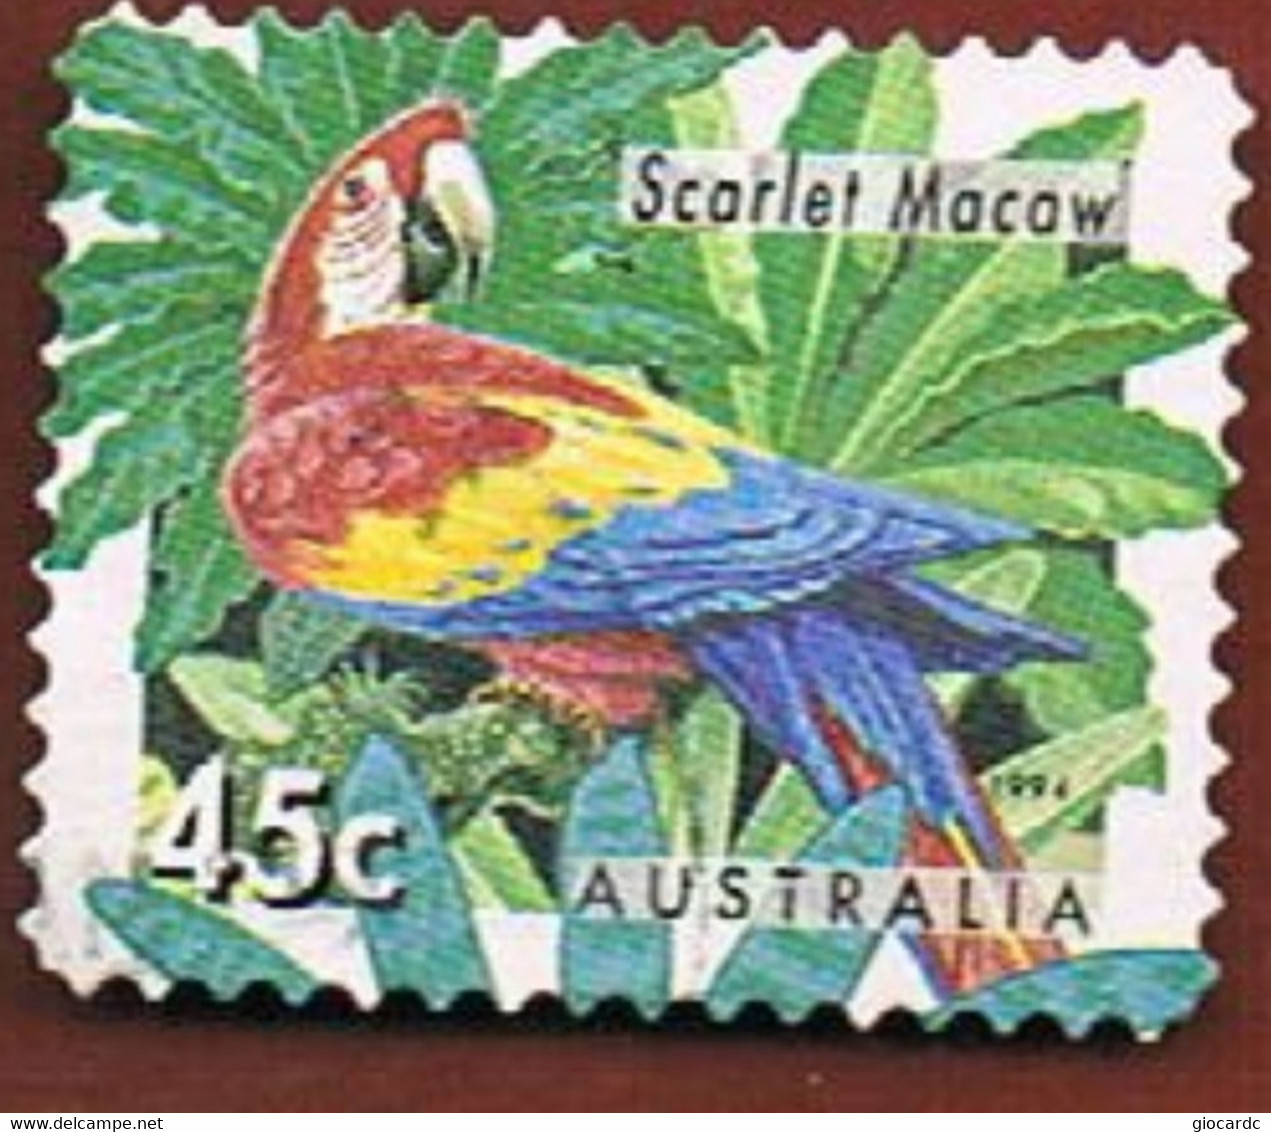 AUSTRALIA  -  SG 1485  -      1994  BIRDS: SCARLET MACAW   -       USED - Oblitérés